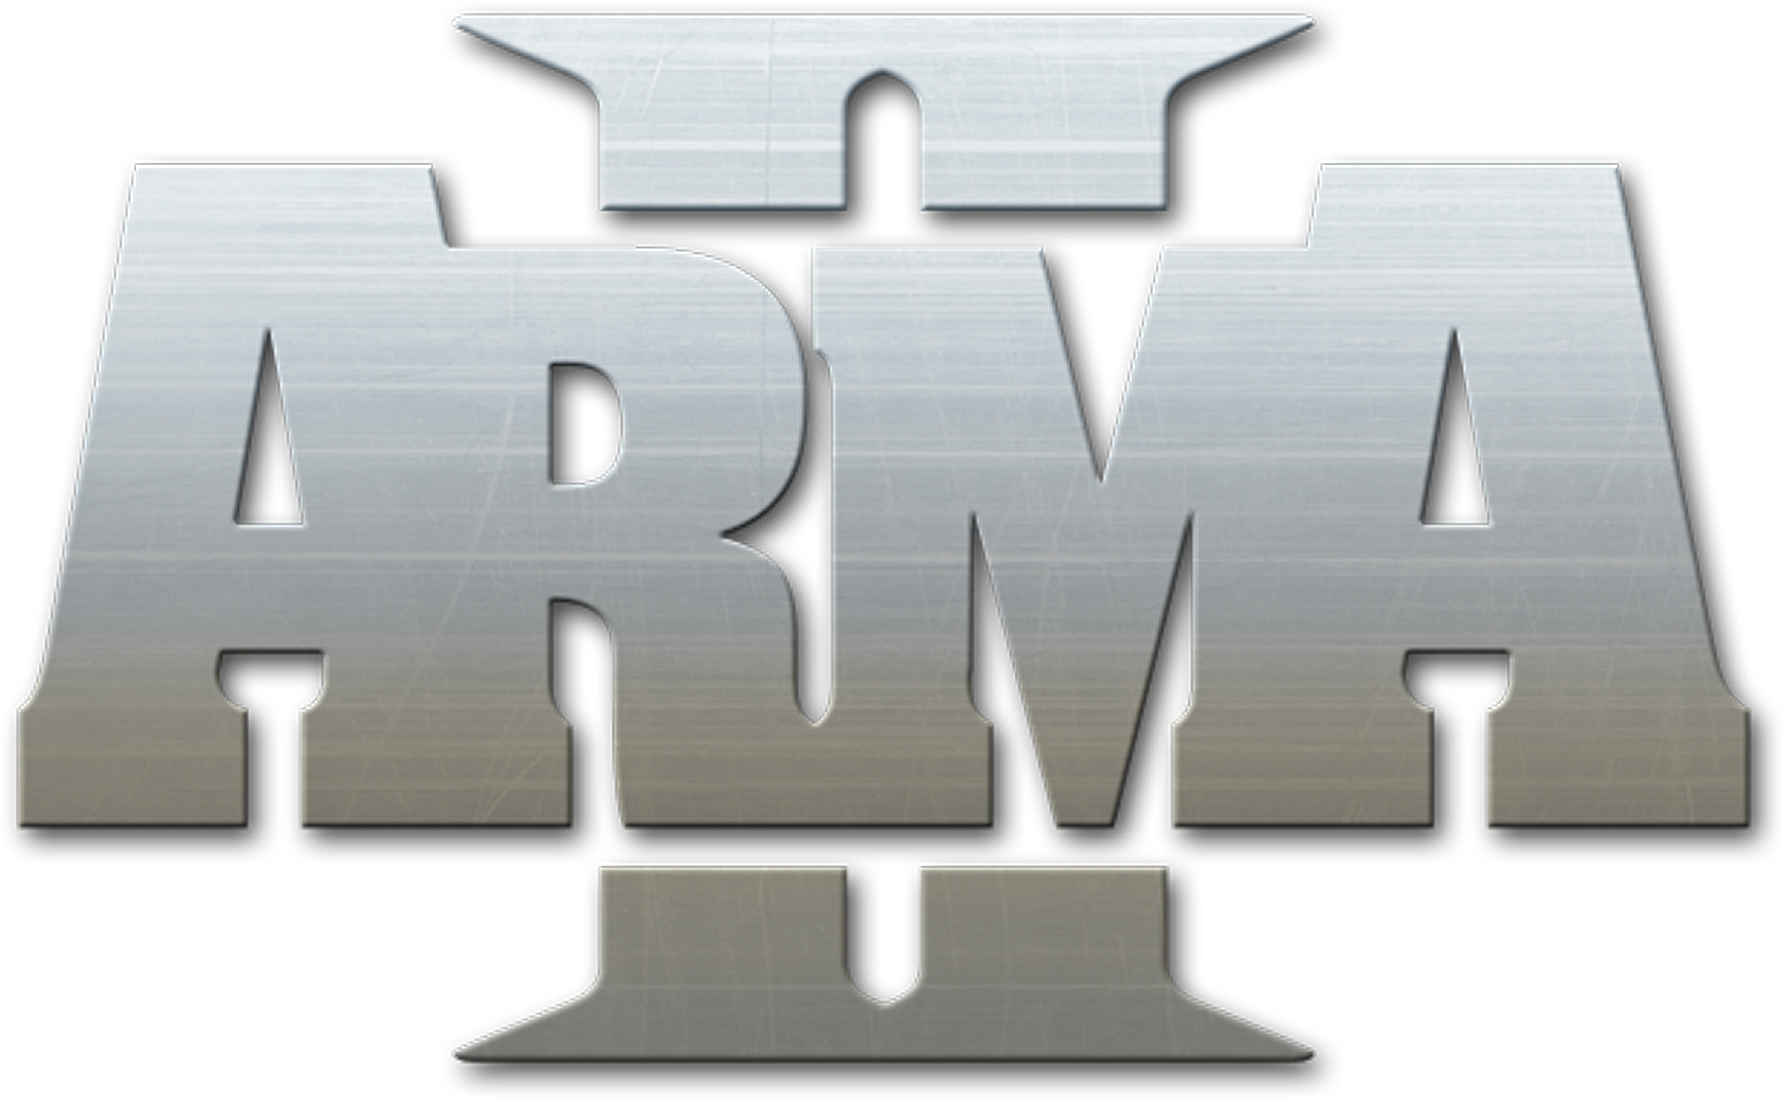 Logo ARMA 3